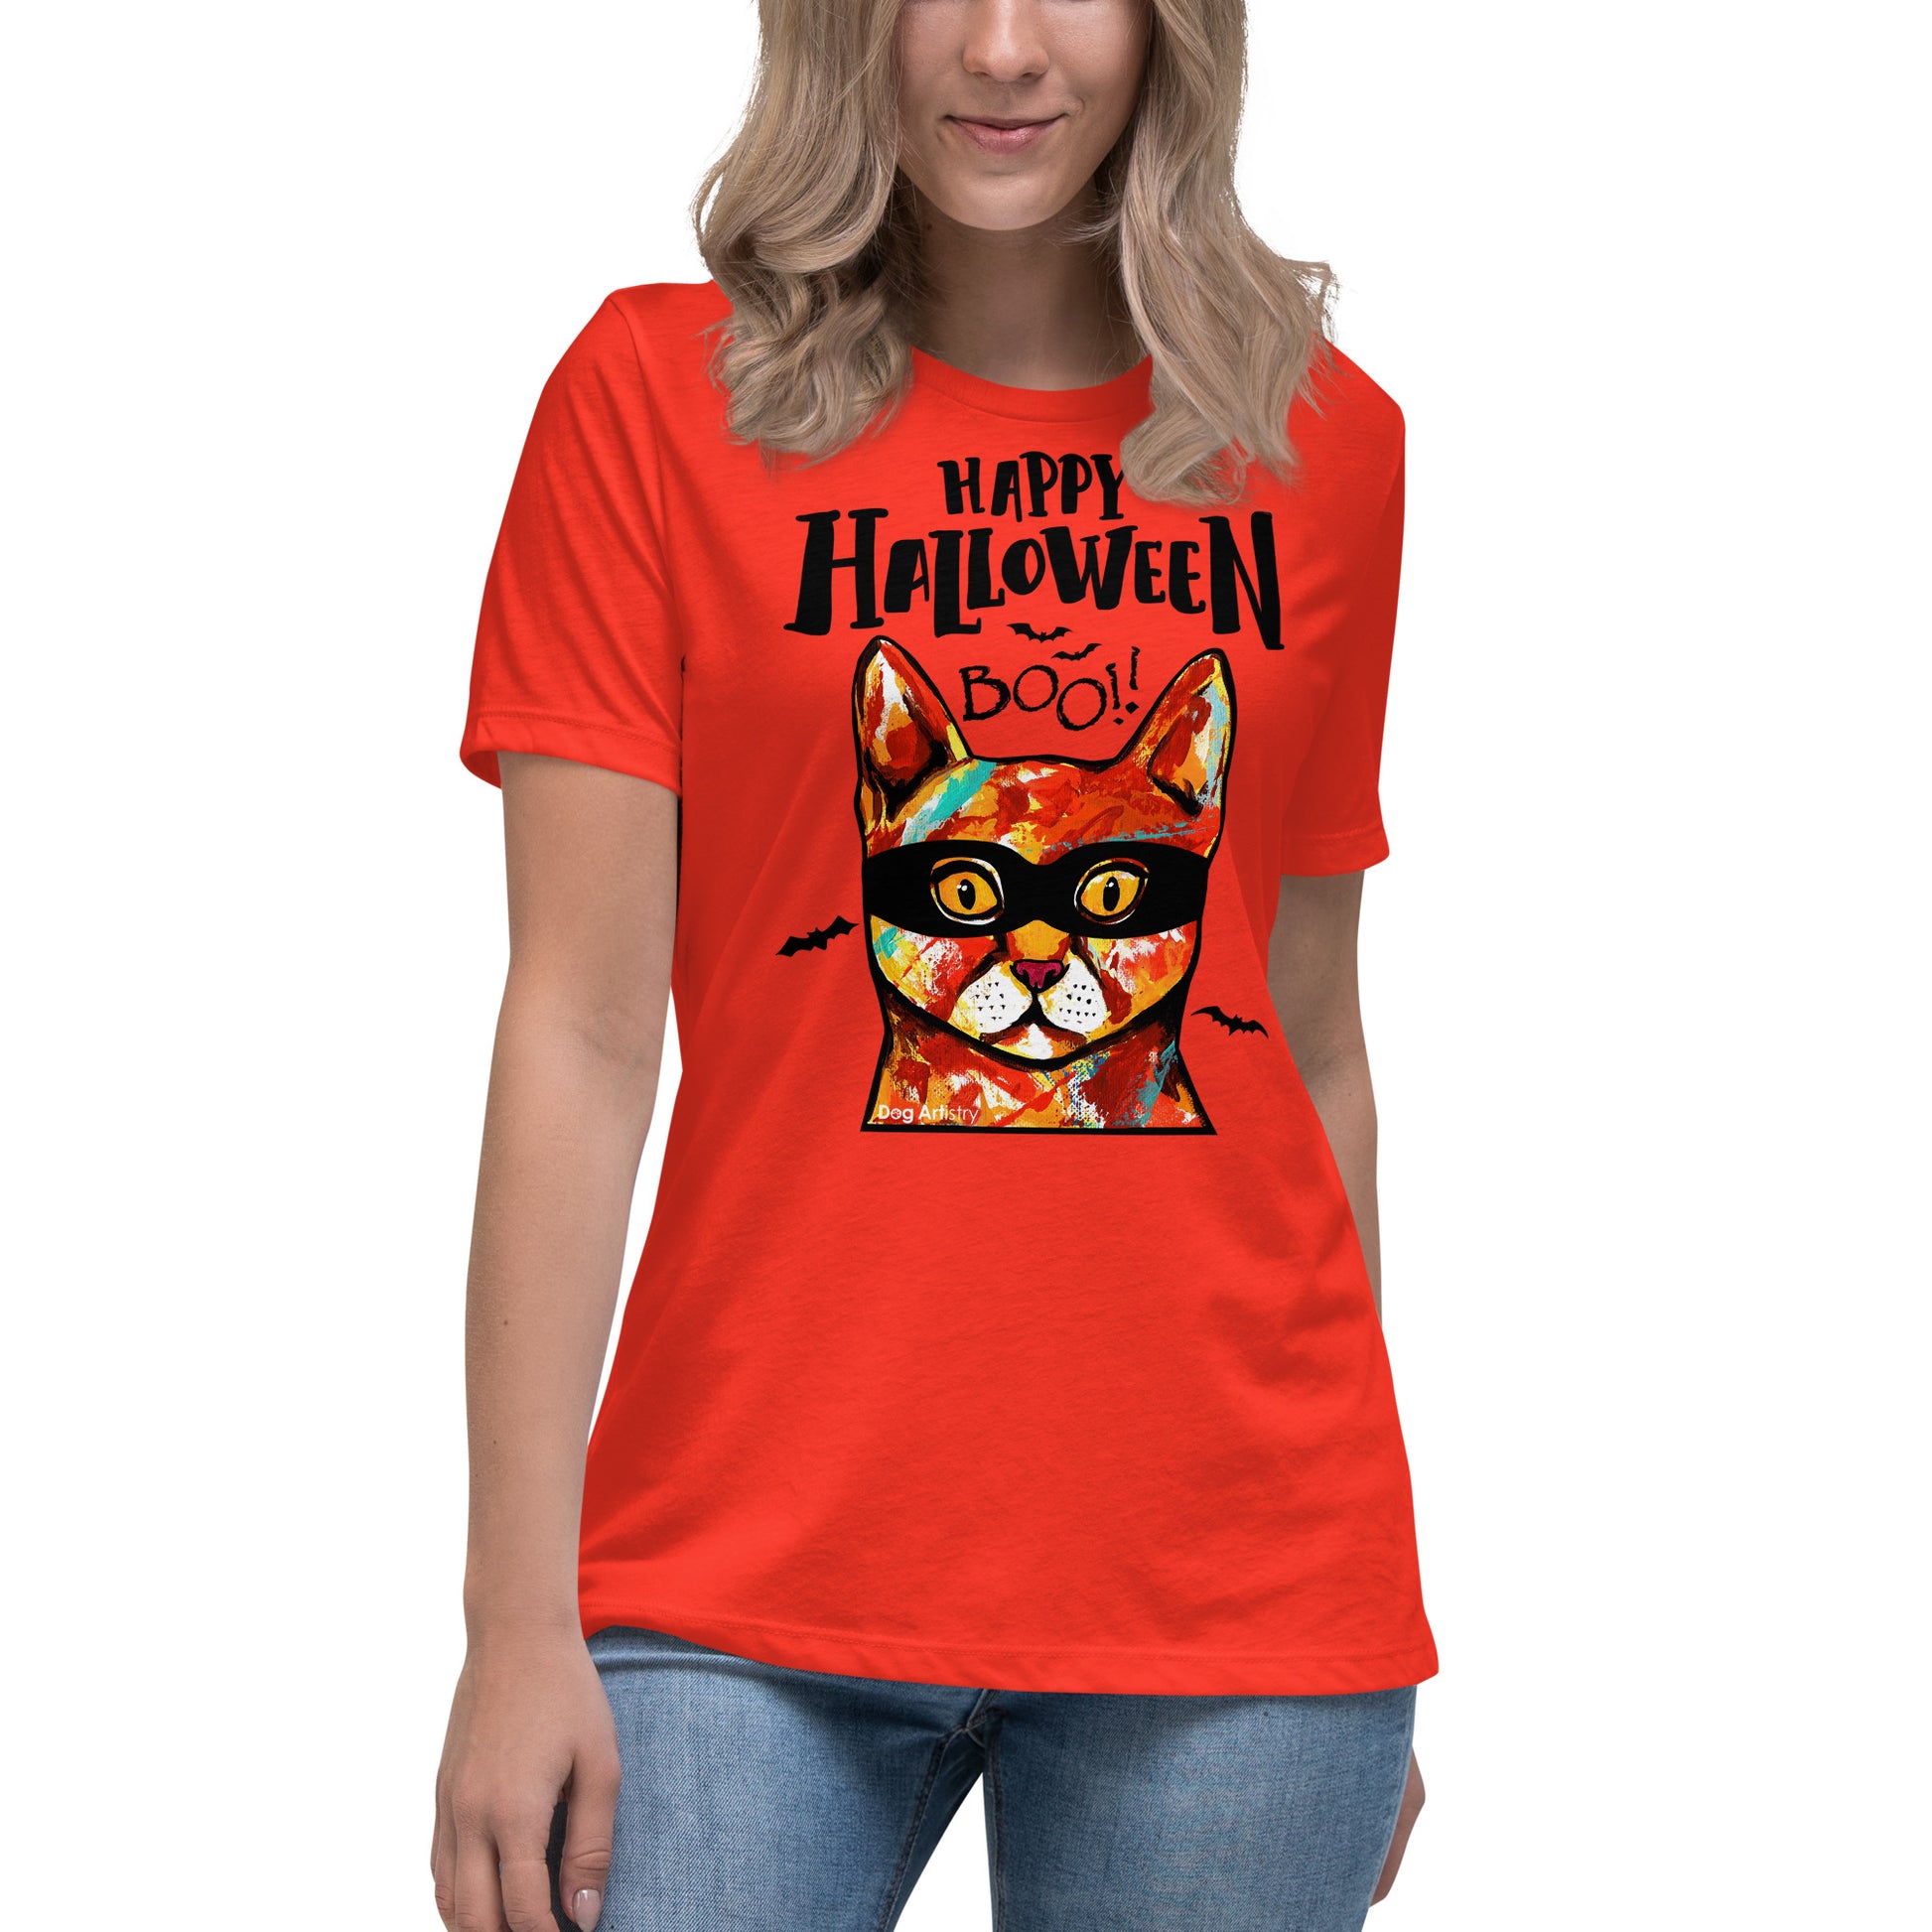 Funny Happy Halloween Cat wearing mask women’s poppy t-shirt by Dog Artistry.